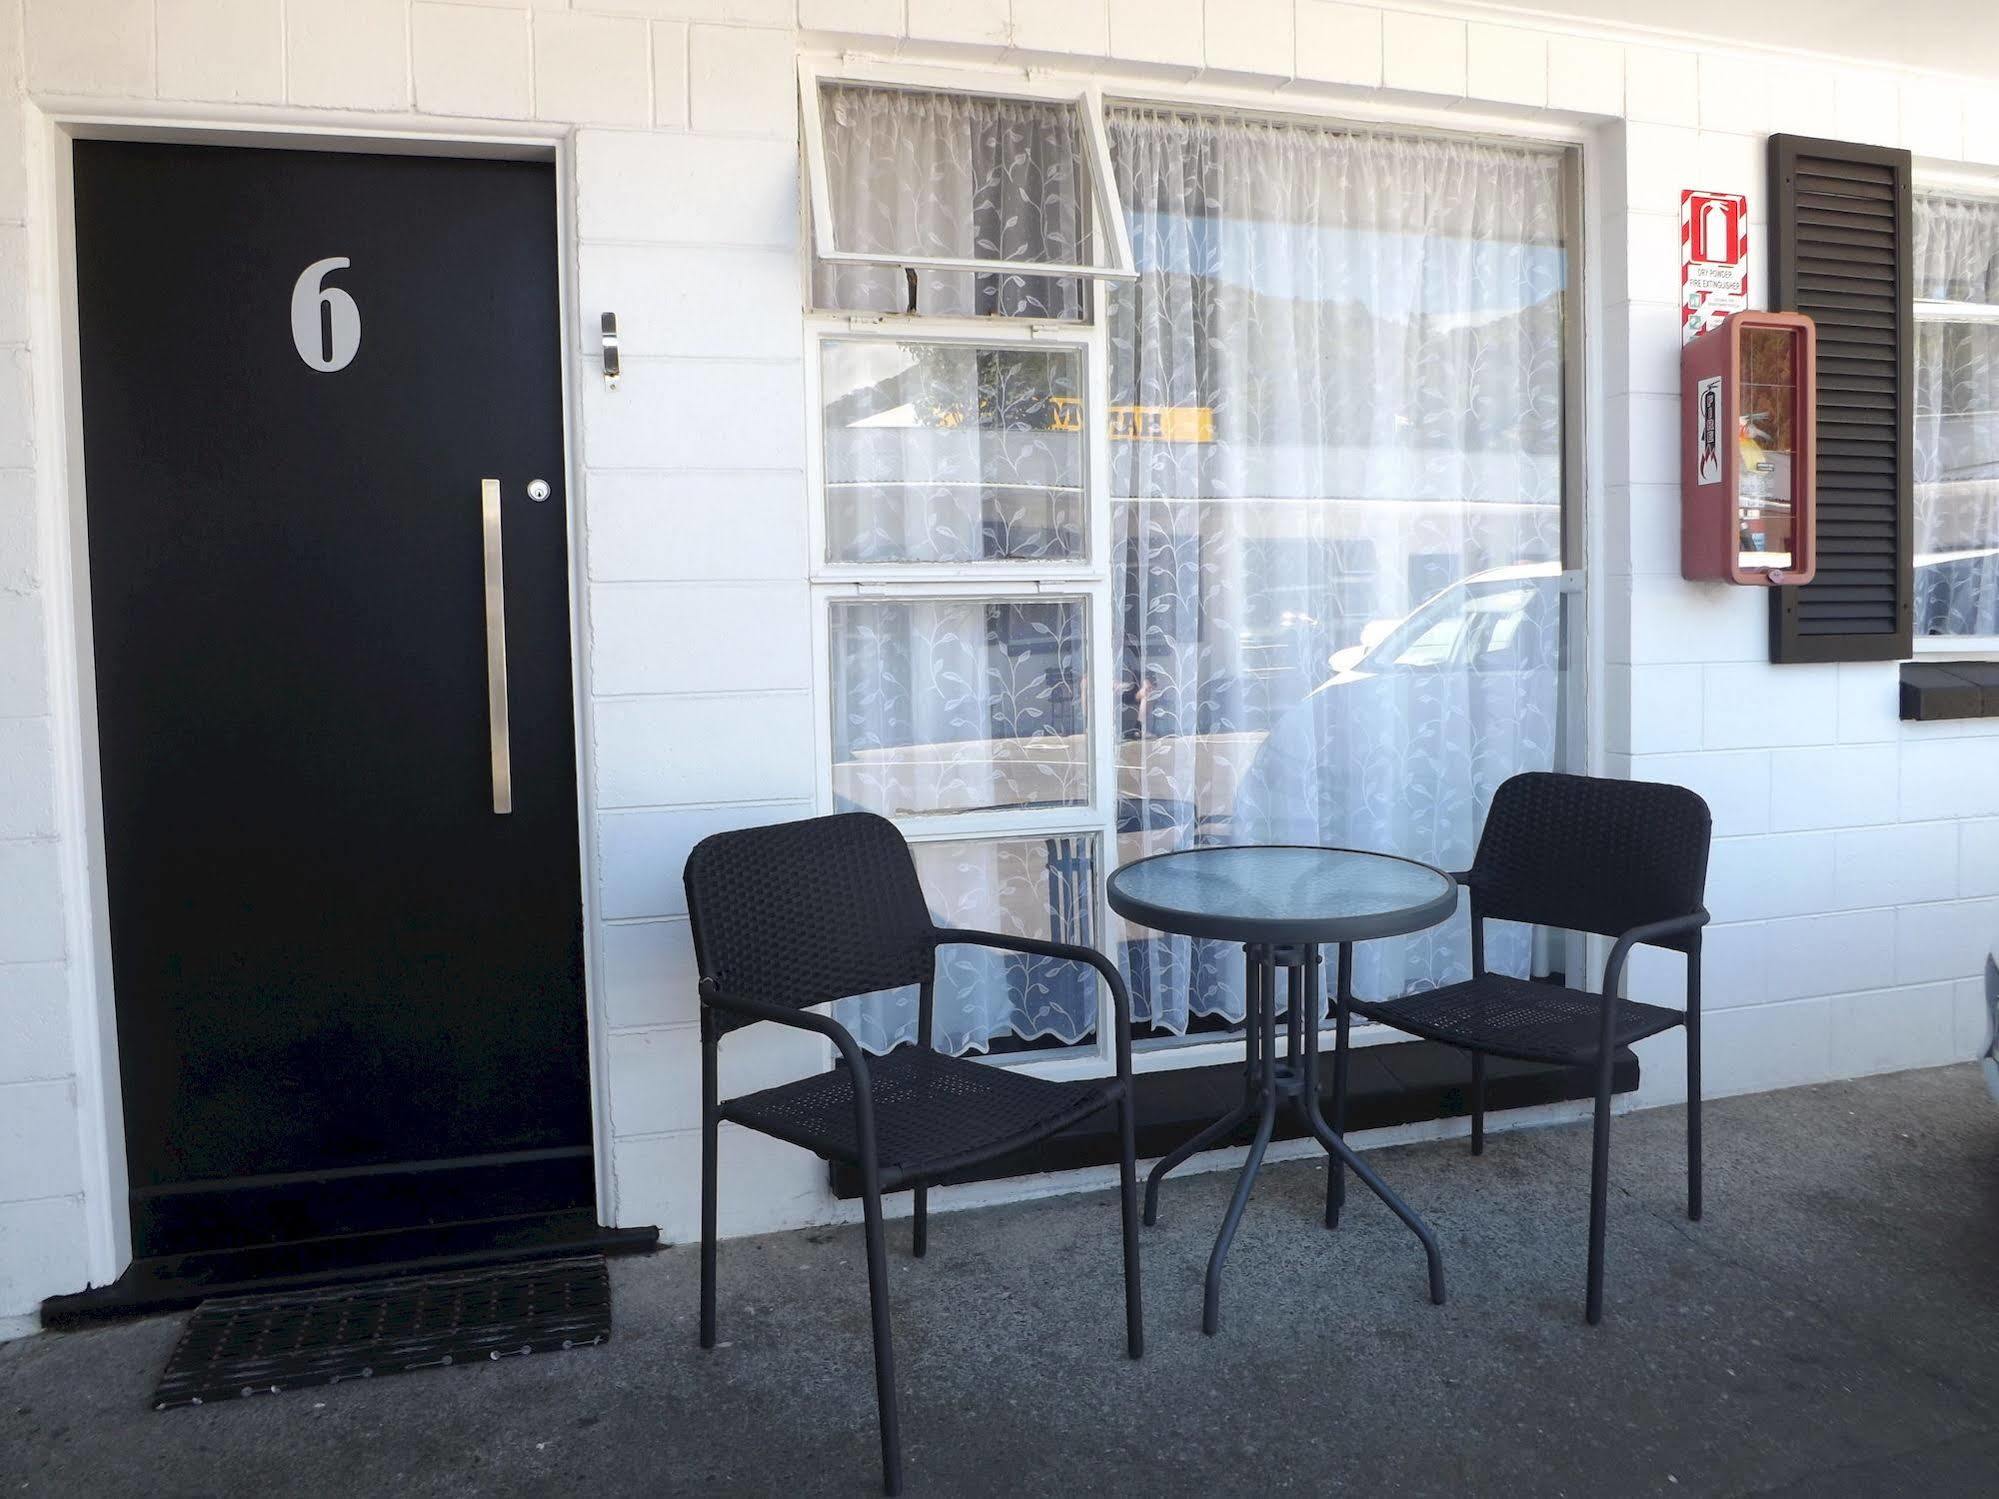 High Street Living Motel Picton Exterior photo